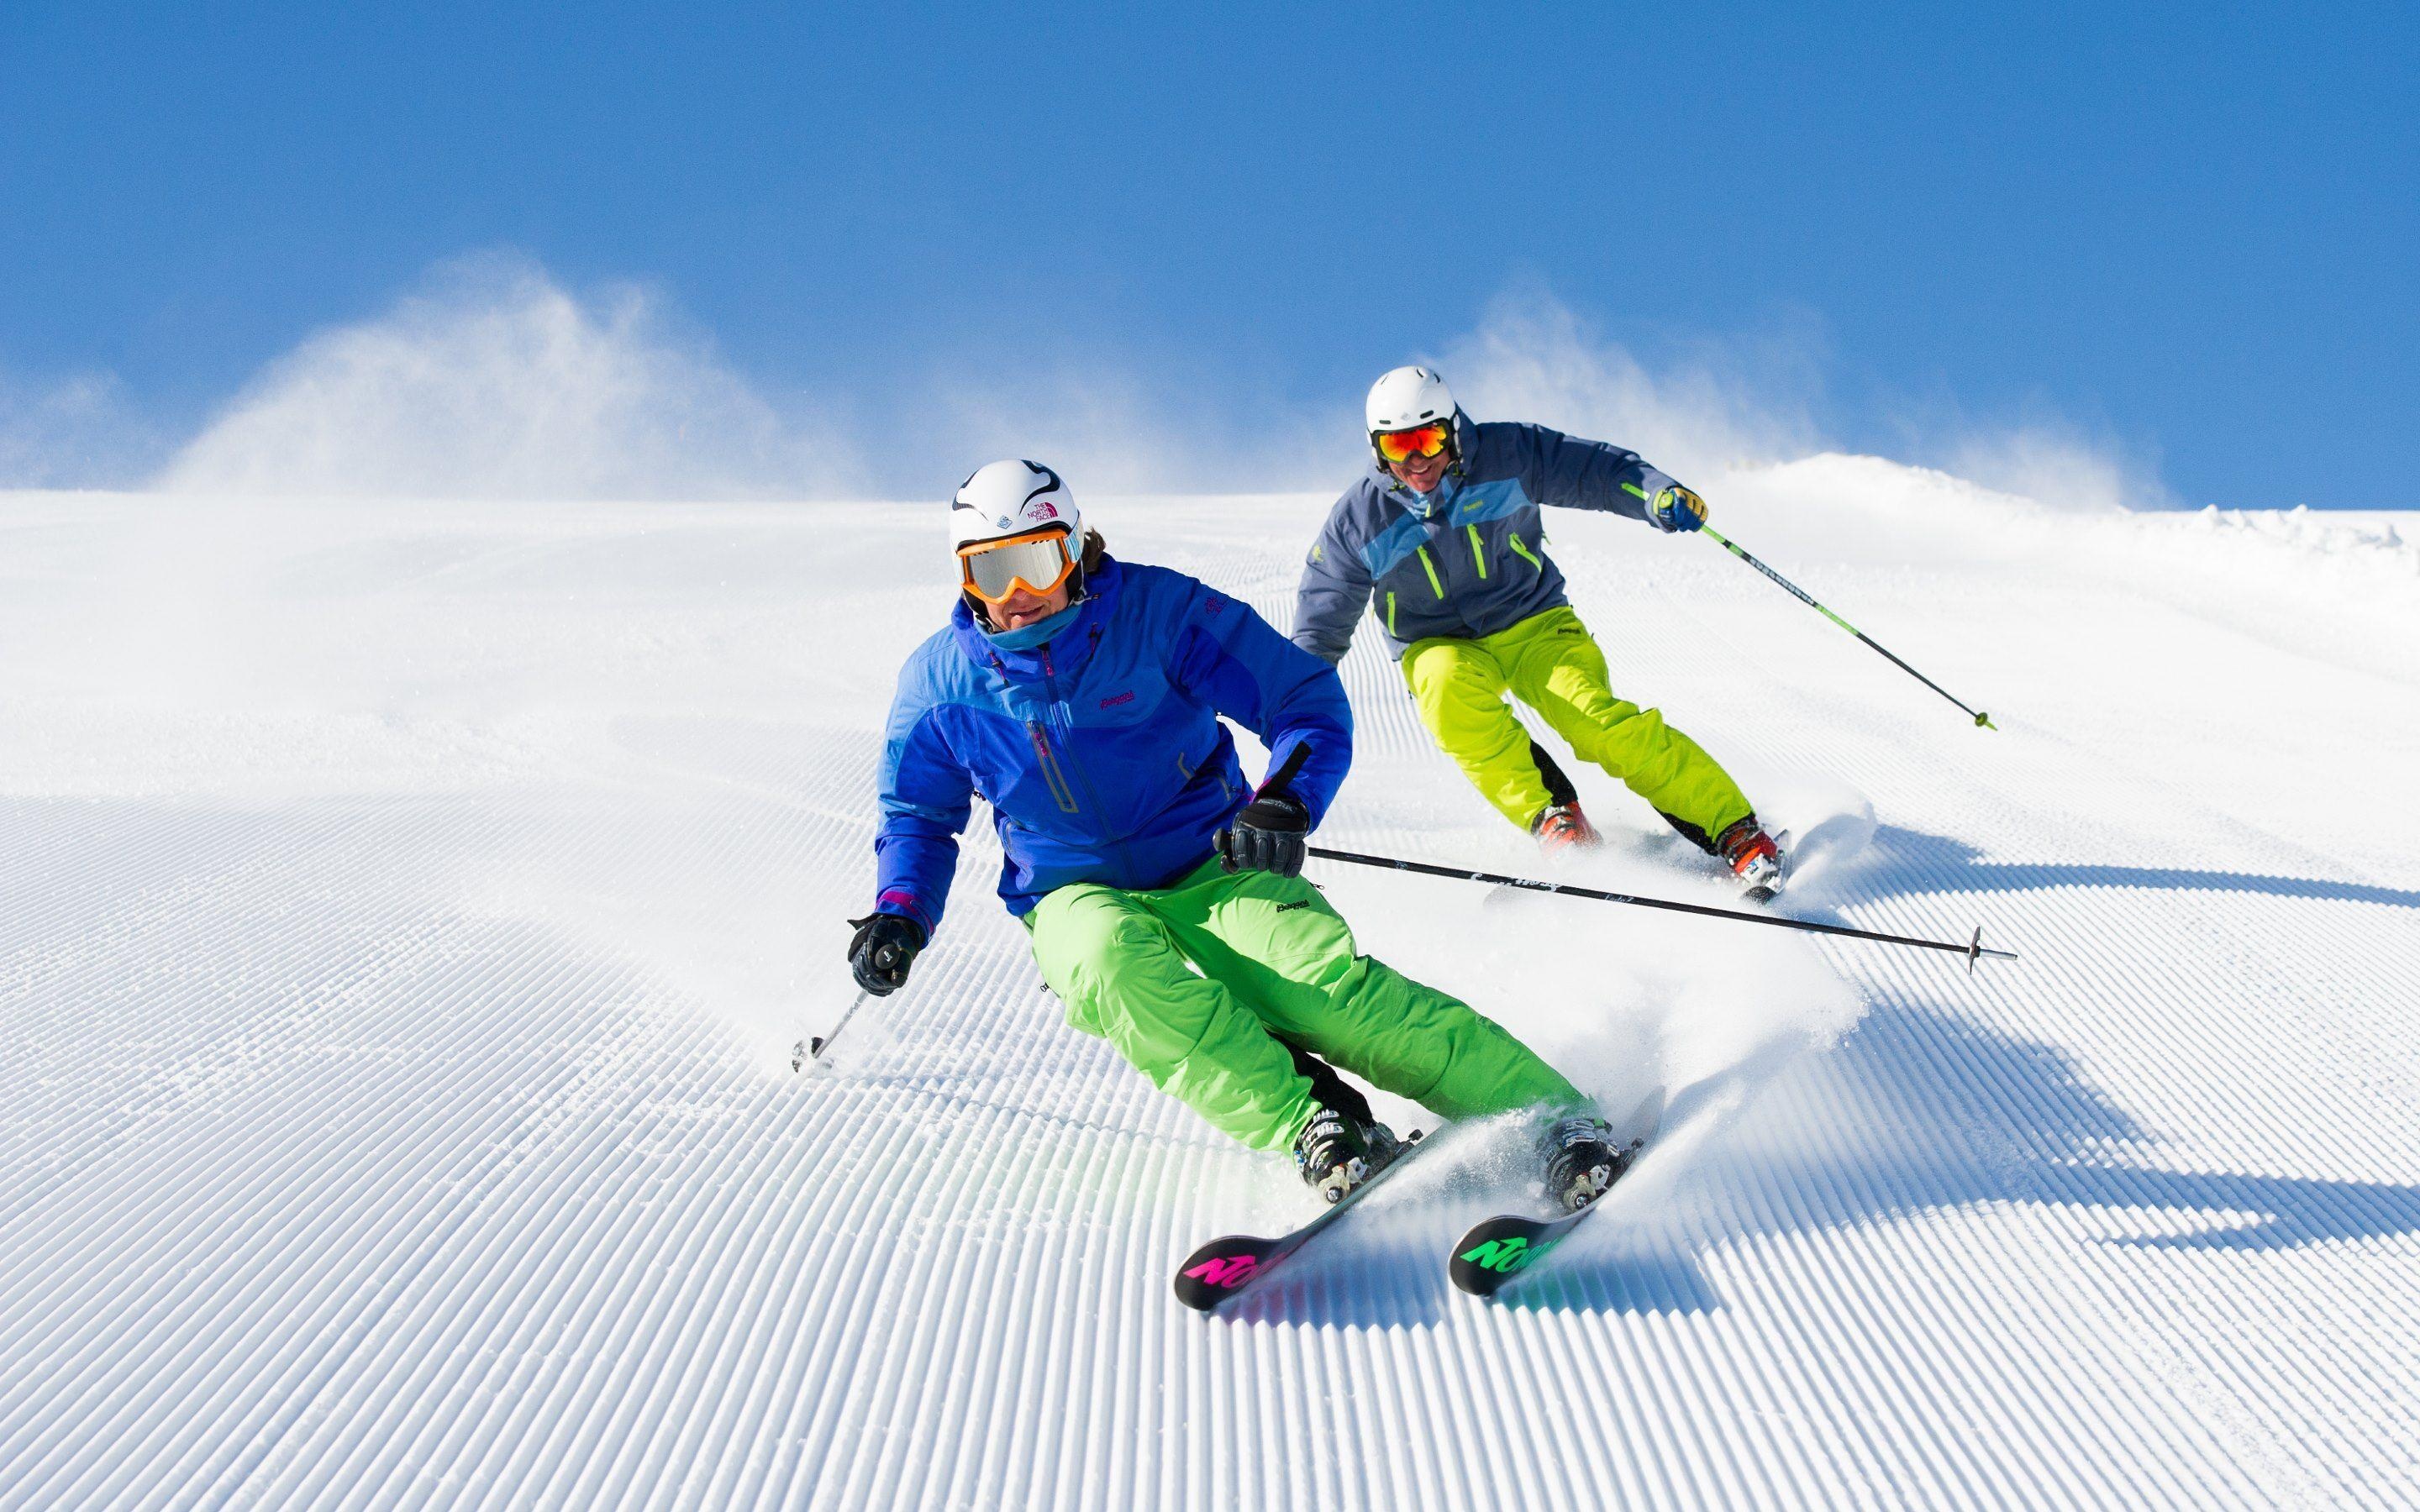 Alpine Skiing: The sport of gliding on snow, Downhill, Slalom, Winter activity. 2880x1800 HD Wallpaper.